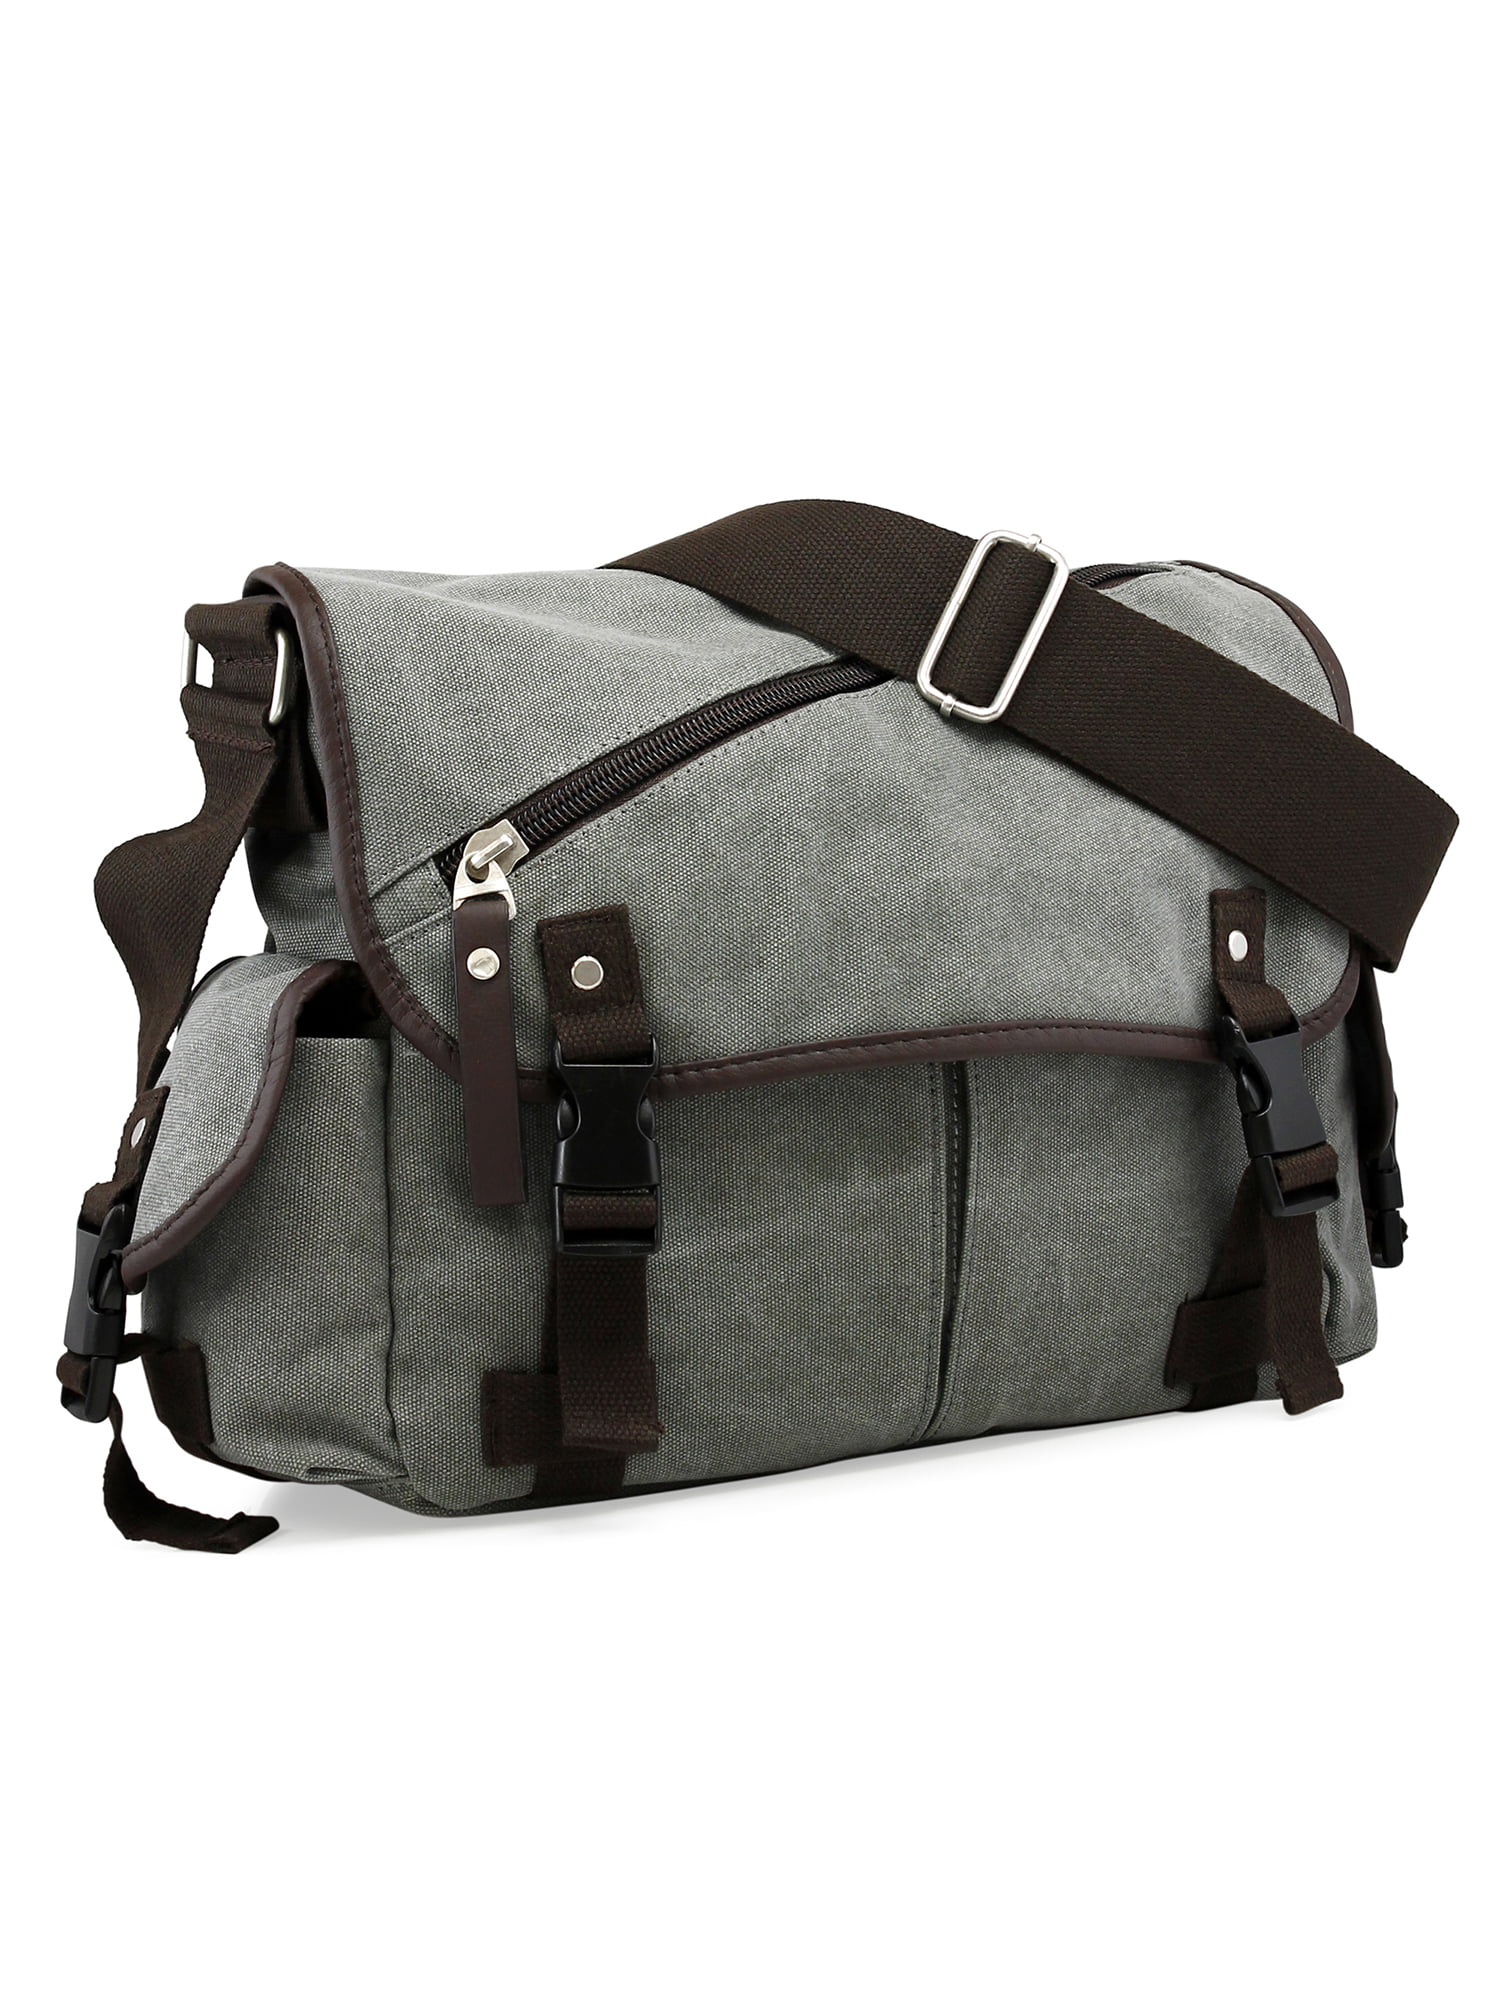 Vintage Canvas Shoulder Bag College School Laptop Messenger Bag Crossbody  Bags Satchel Handbags for Women Men